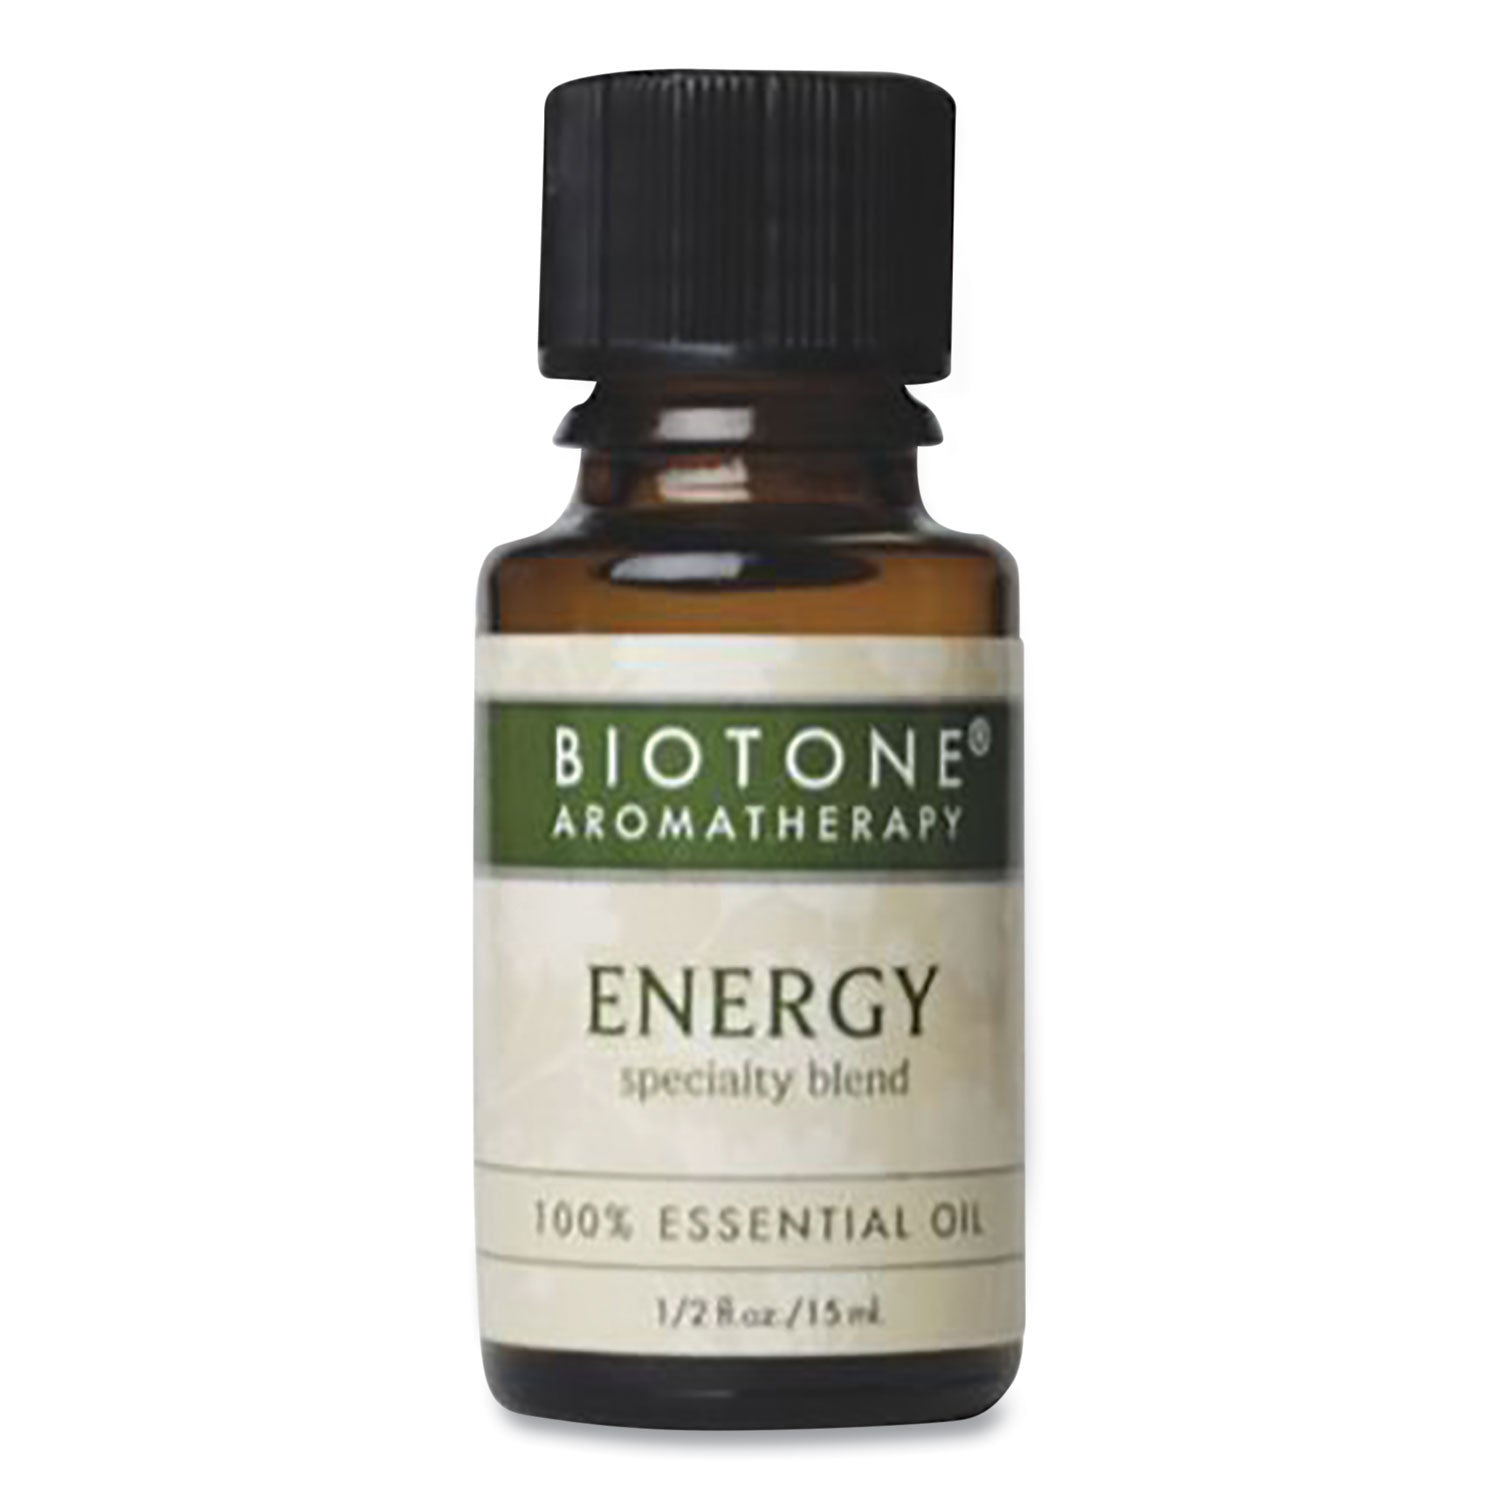 energy-essential-oil-05-oz-bottle-fresh-citrus_btnbaeoenehz - 1